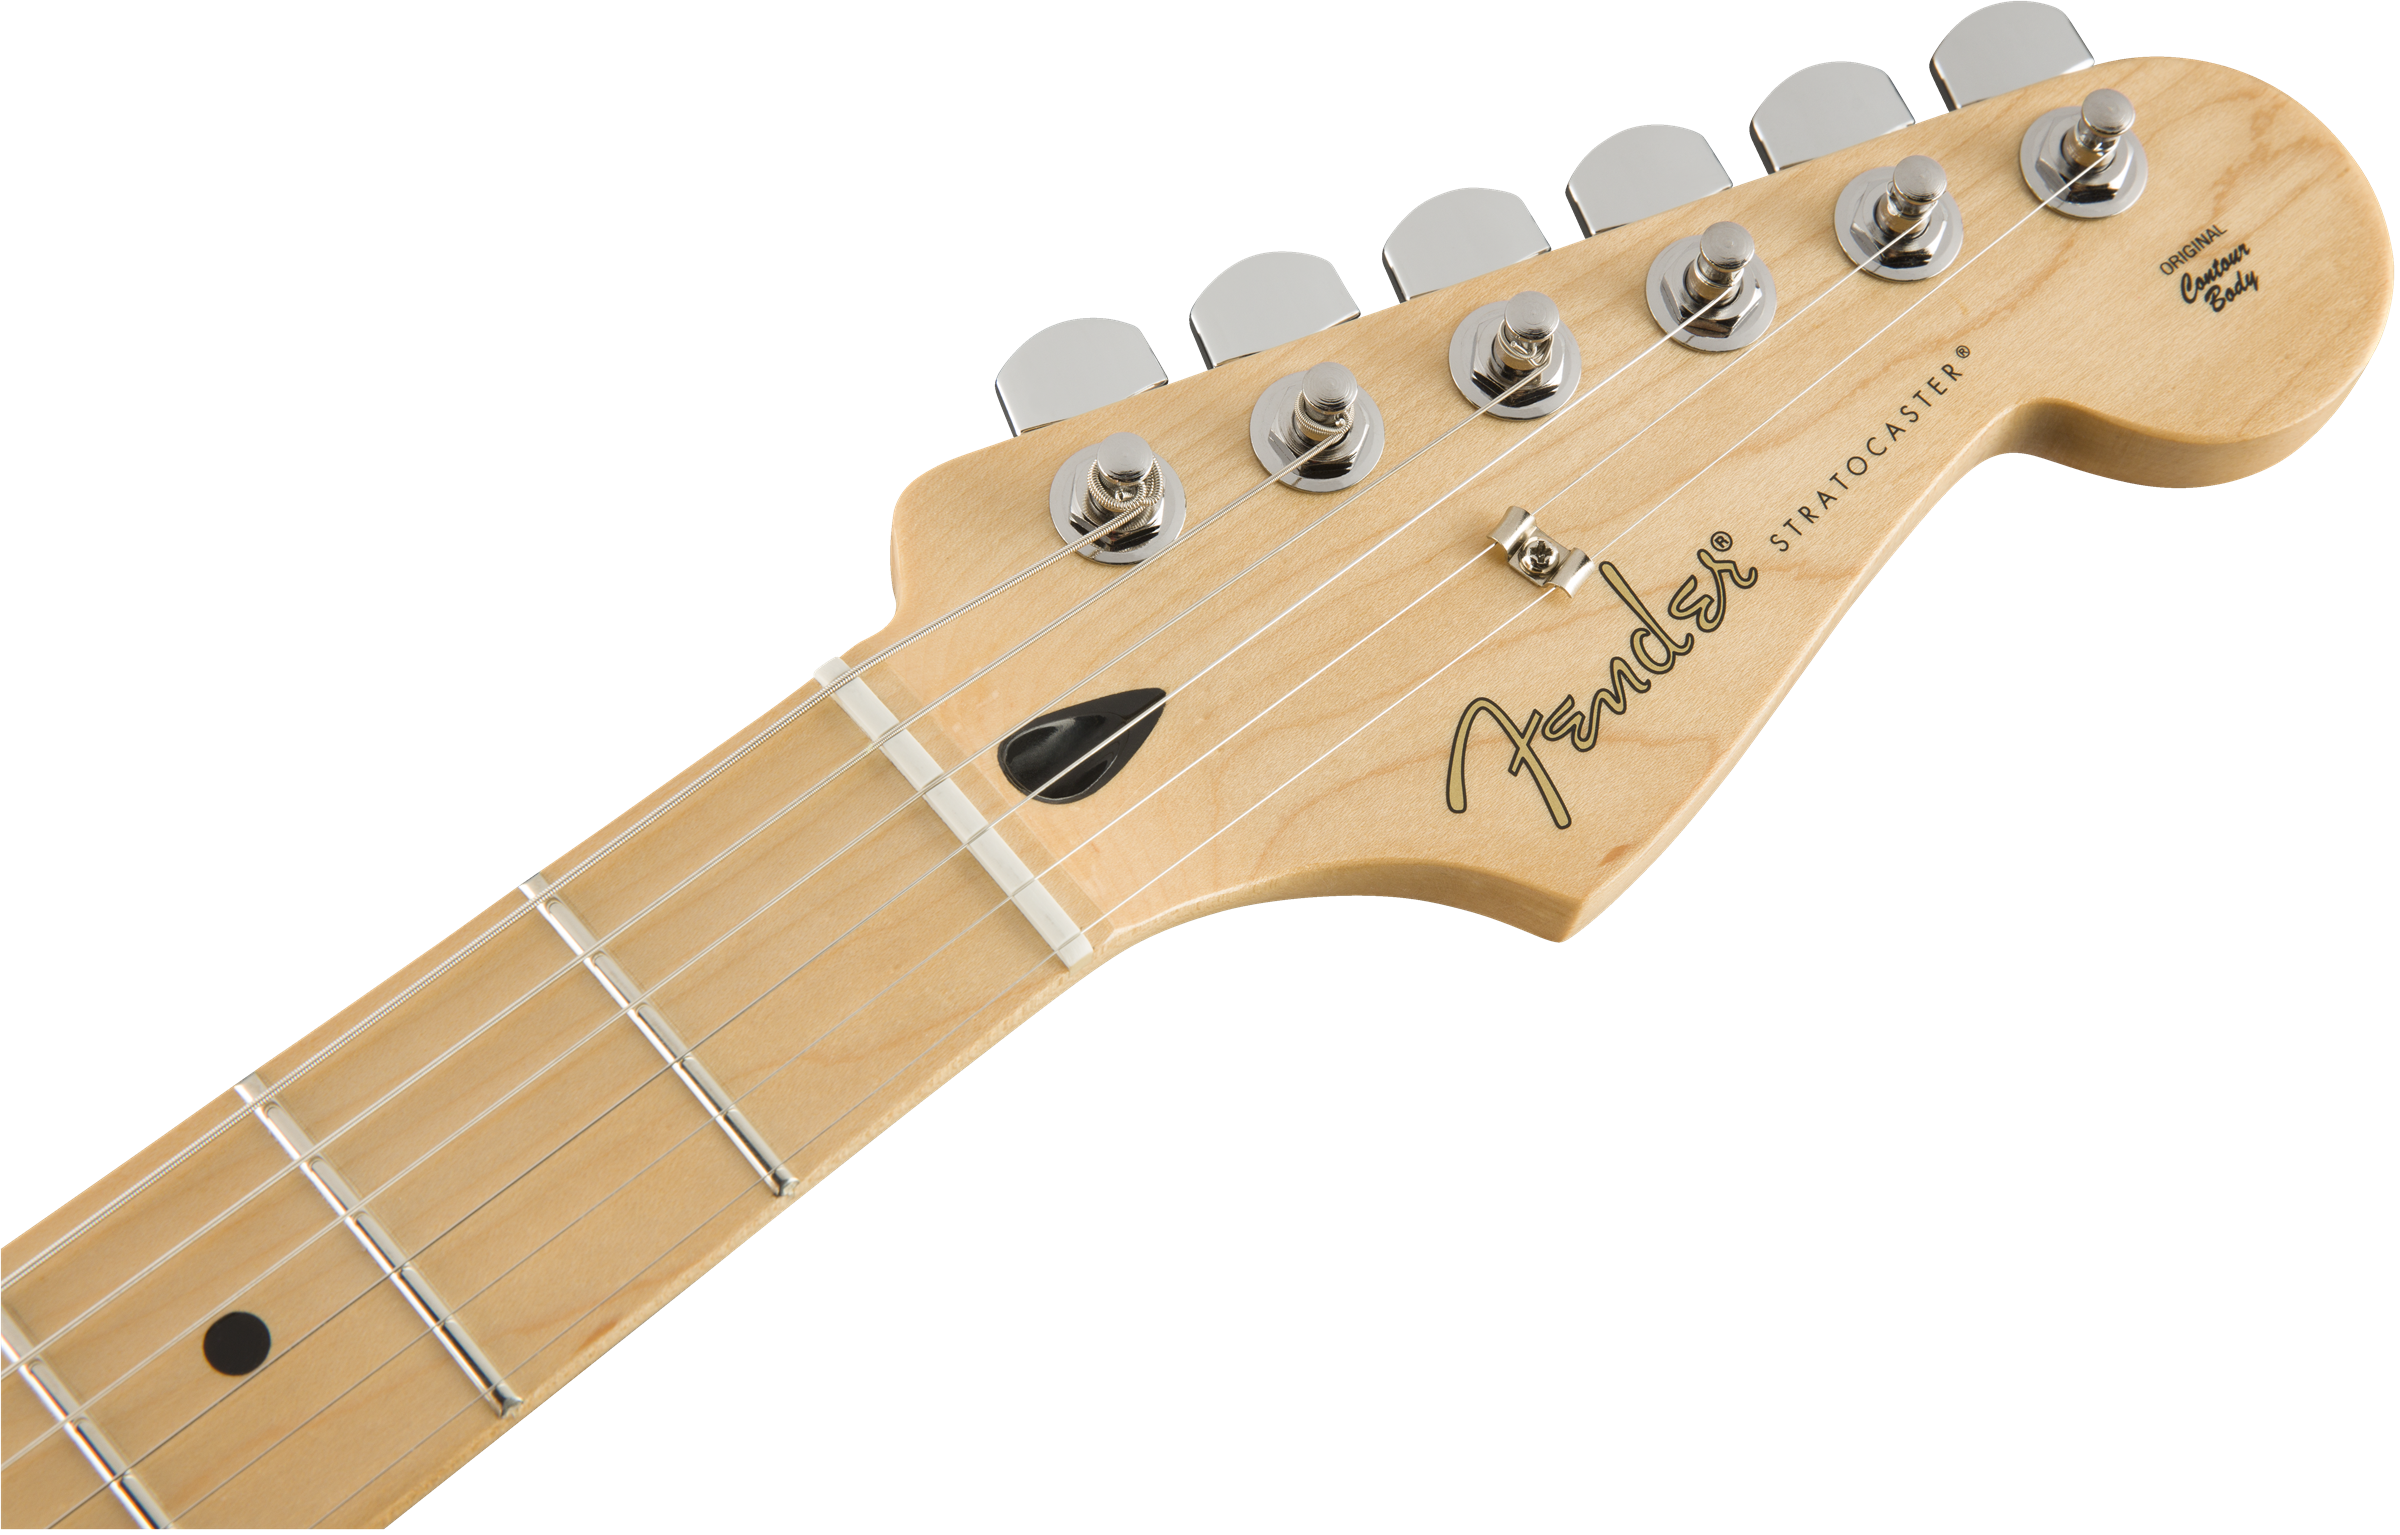 Fender Player Stratocaster Plus Top, Maple Fingerboard, Aged Cherry Burst 0144552531